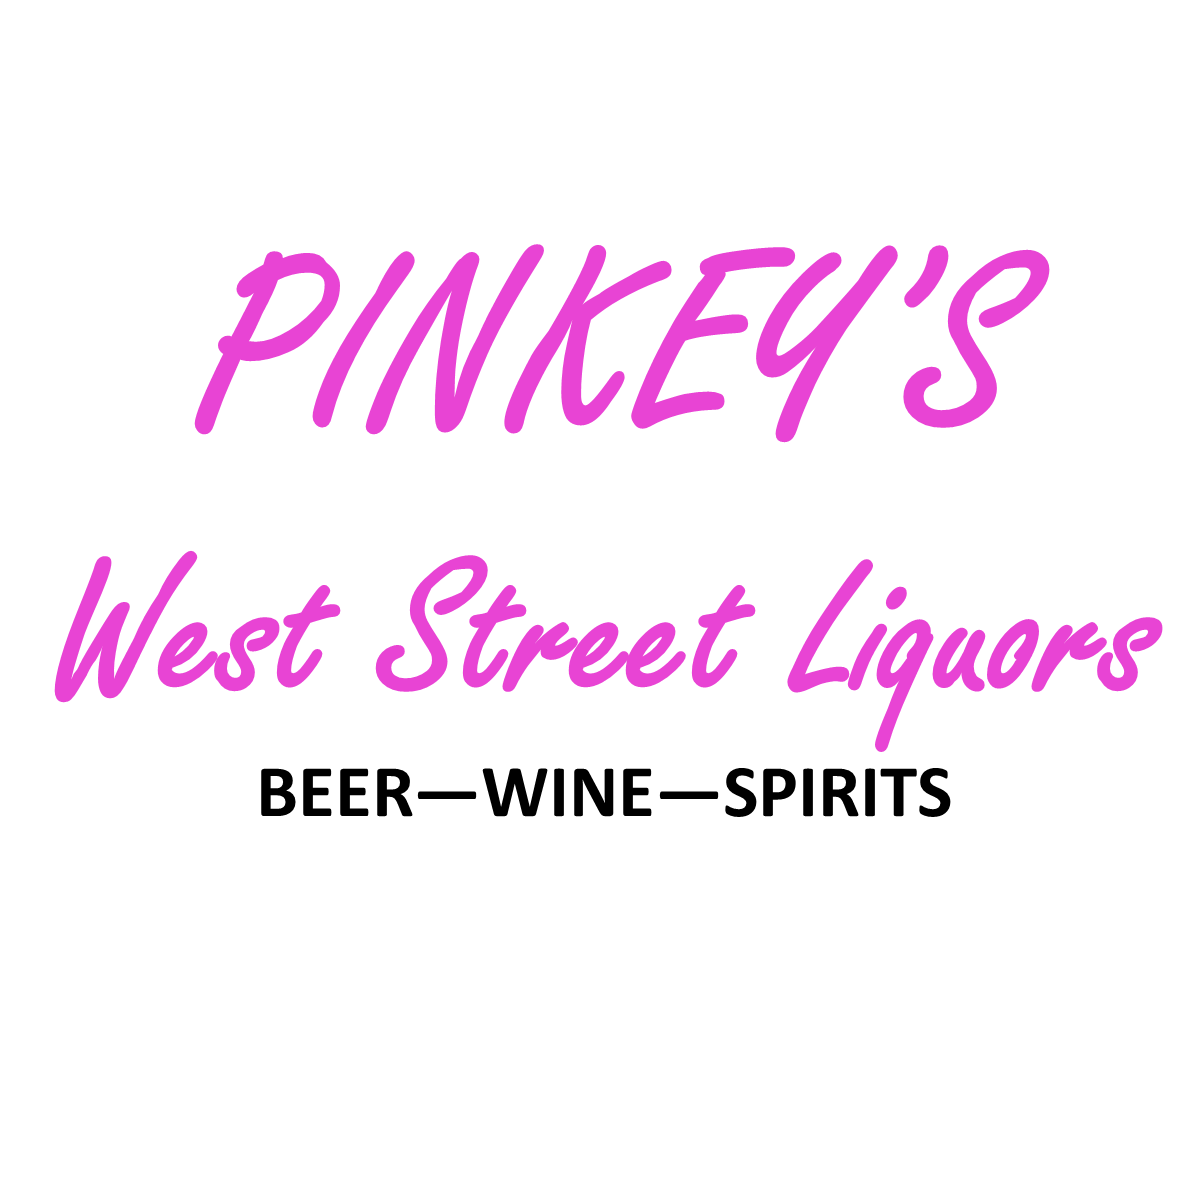 Pinkey's West Street Liquors